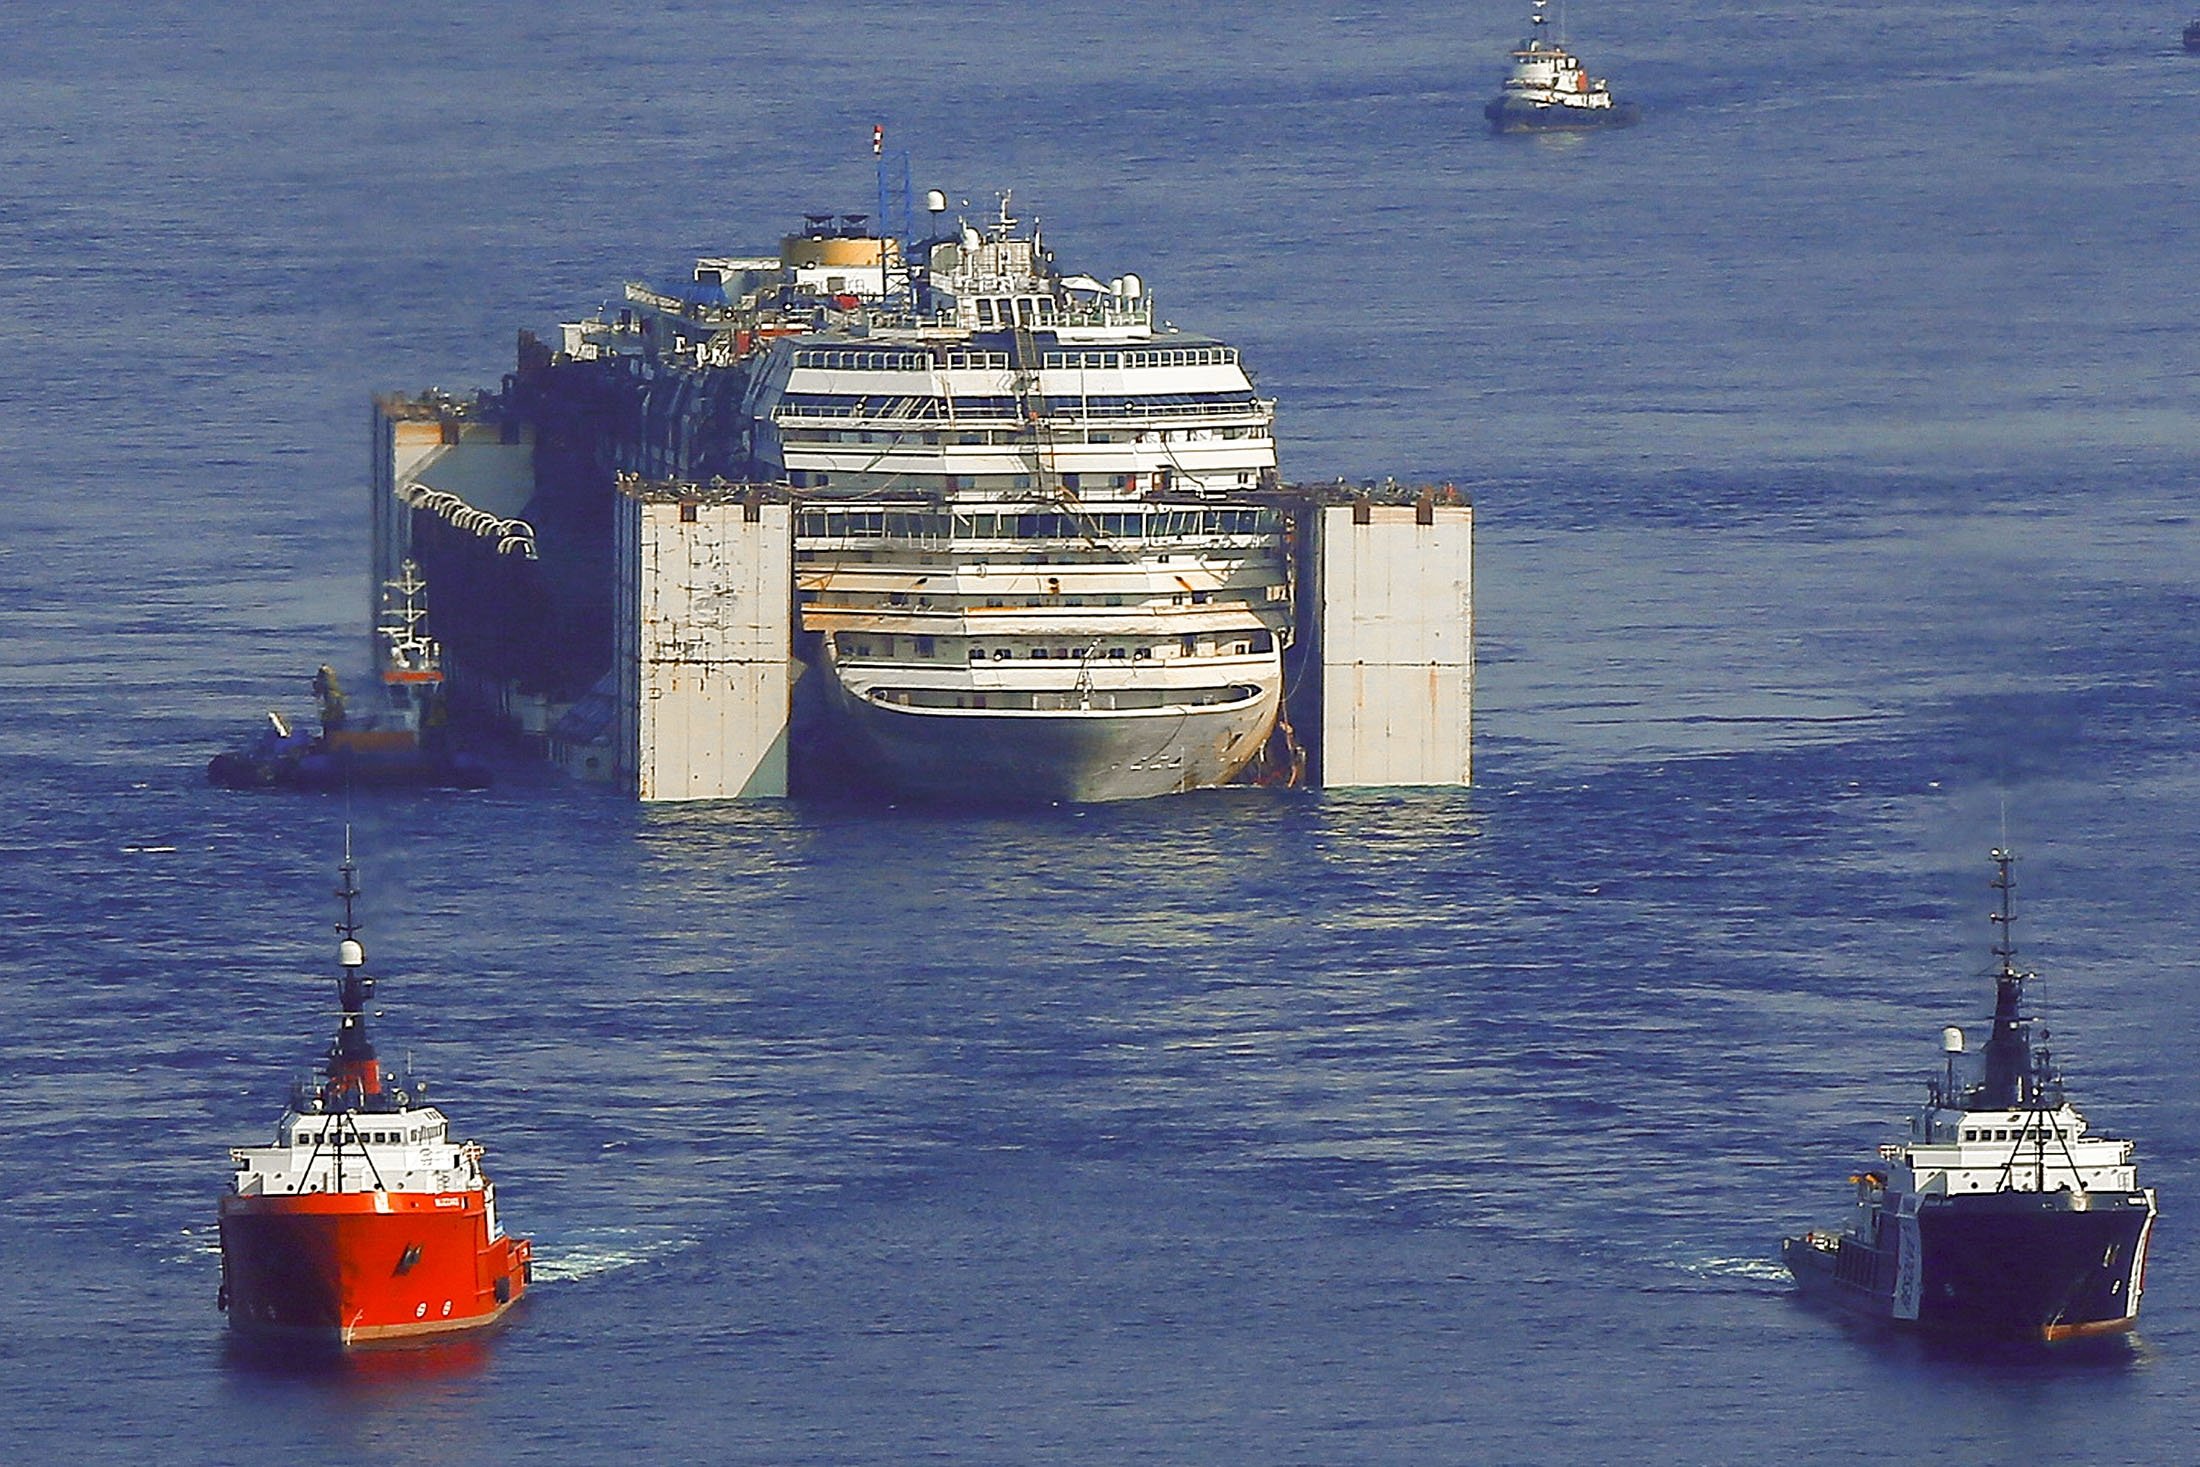 cruise ship crash costa concordia